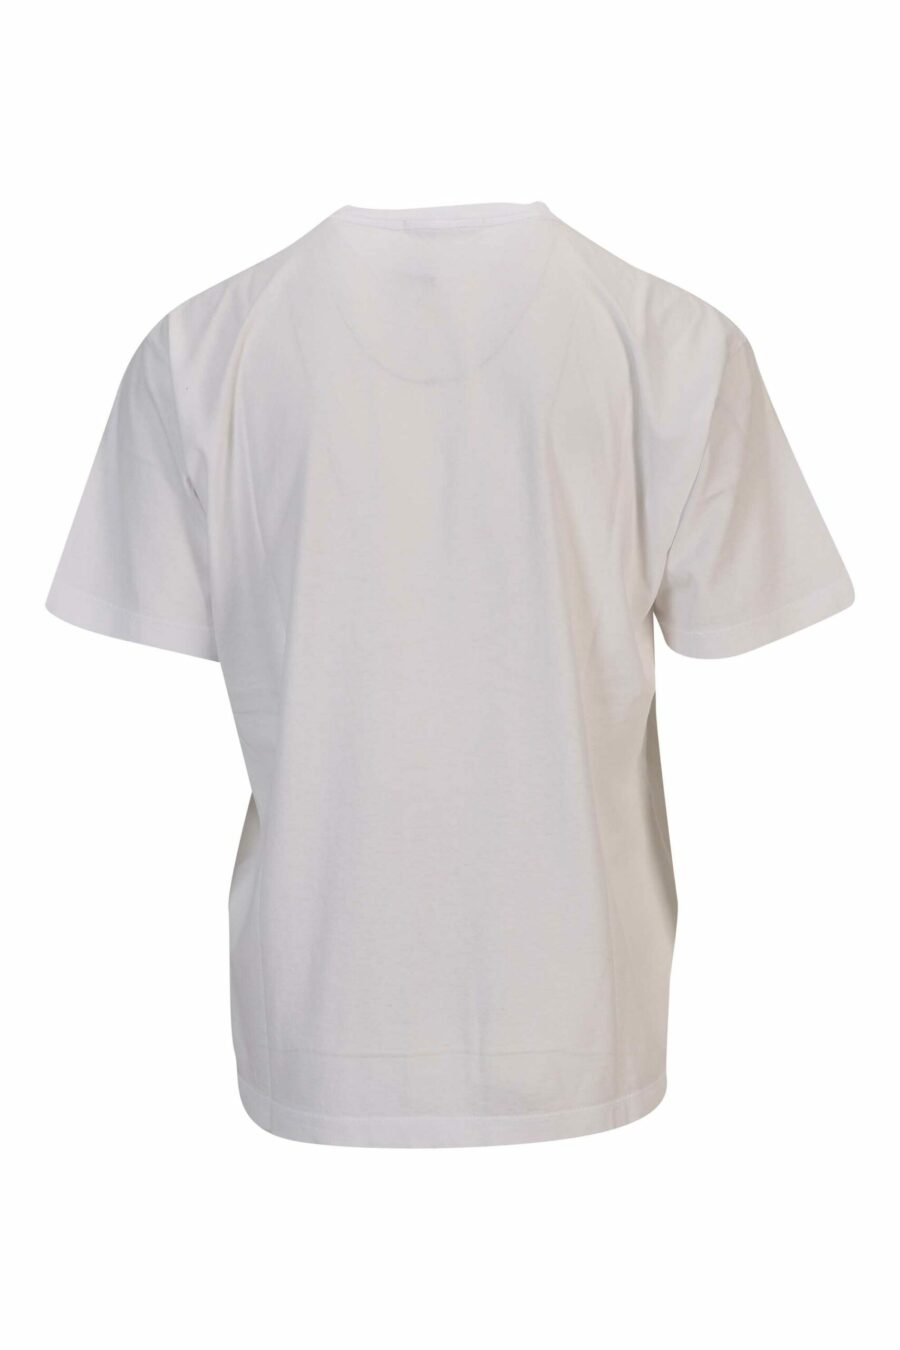 Camiseta blanca con maxilogo brújula - 8052572905230 1 scaled